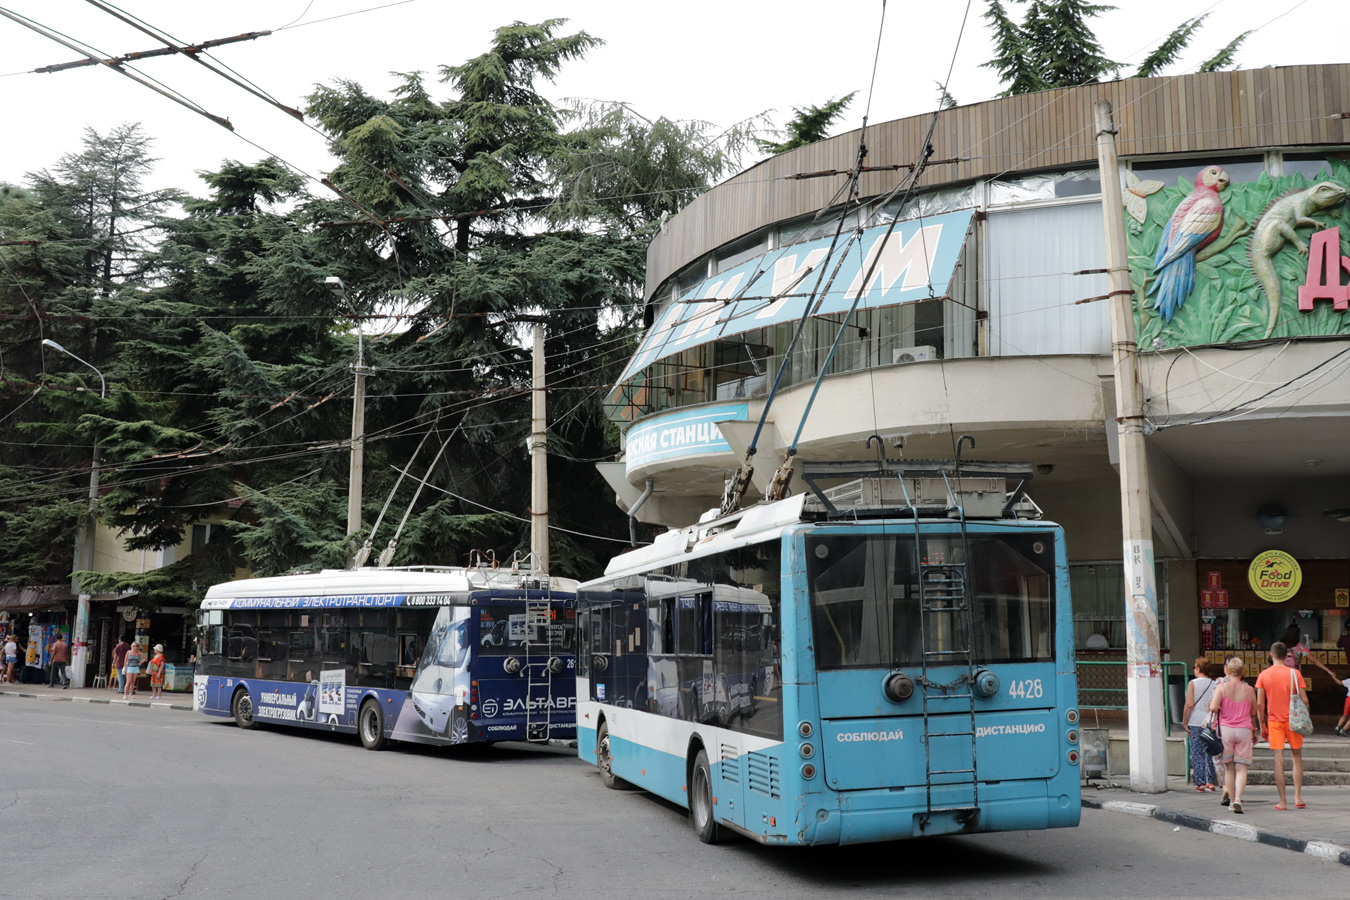 Krymski trolejbus, Bogdan T70115 Nr 4428